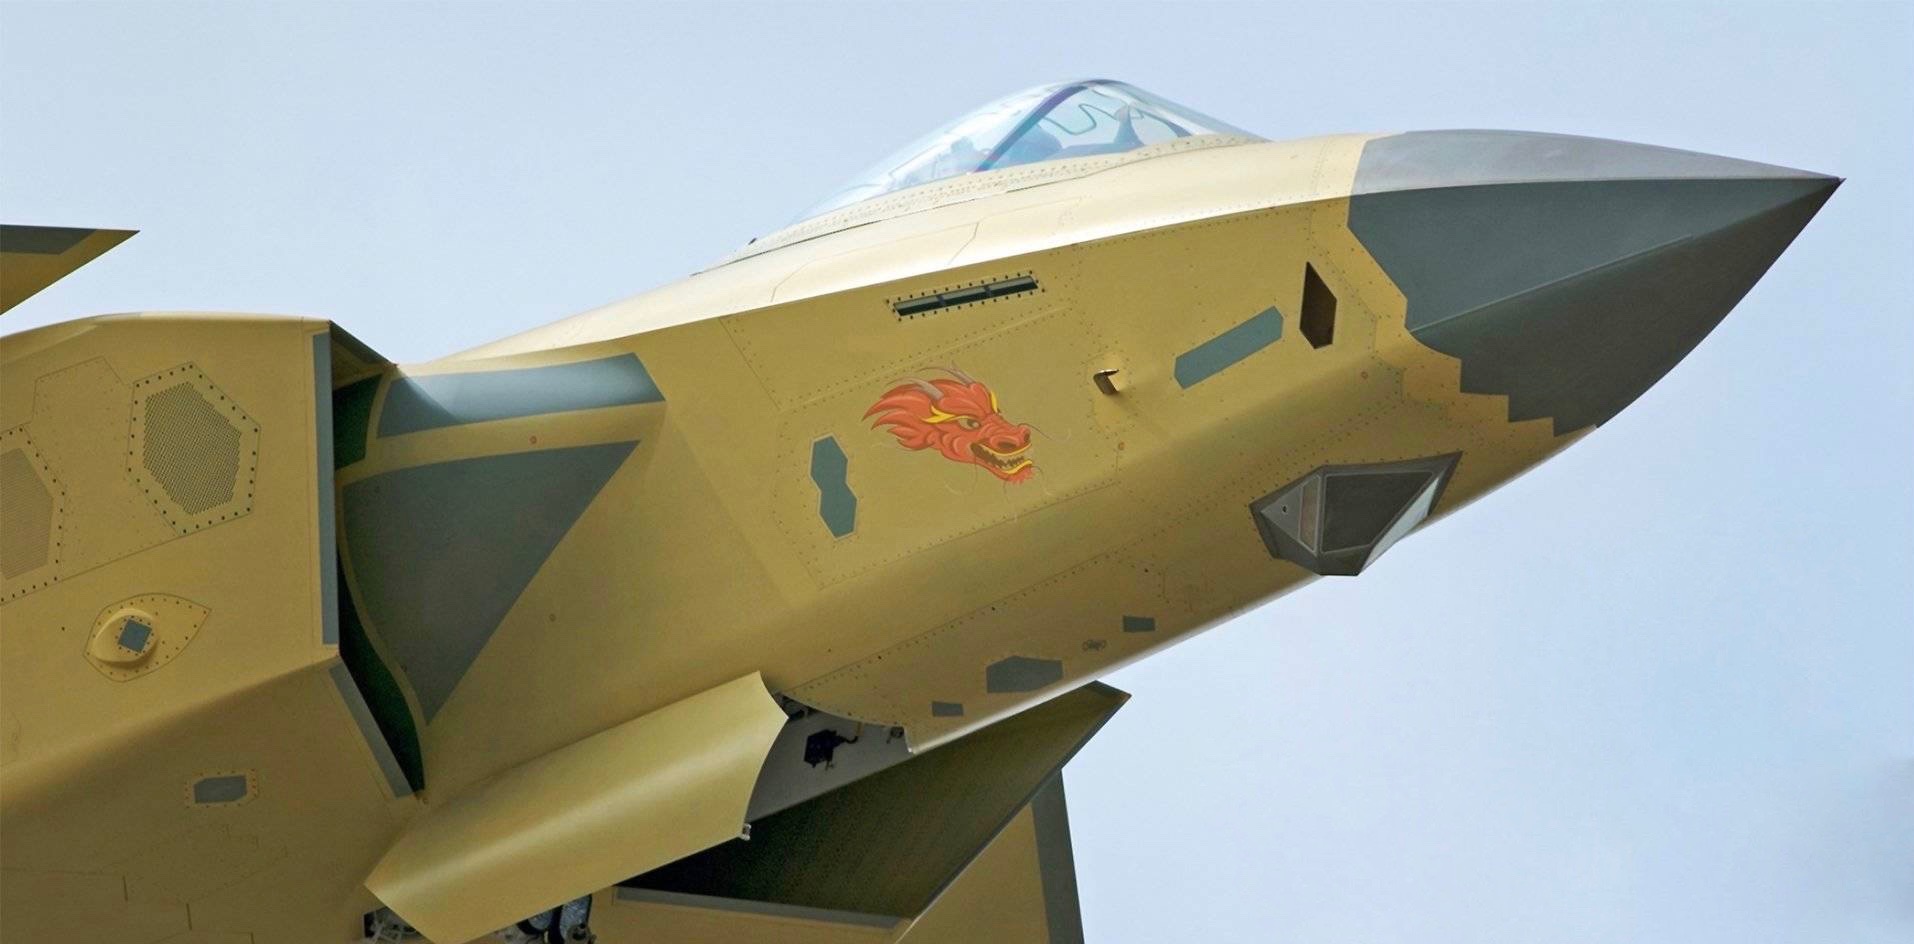 Stealthy Chengdu J20 Fighters Reveal Groundbreaking New Capabilities